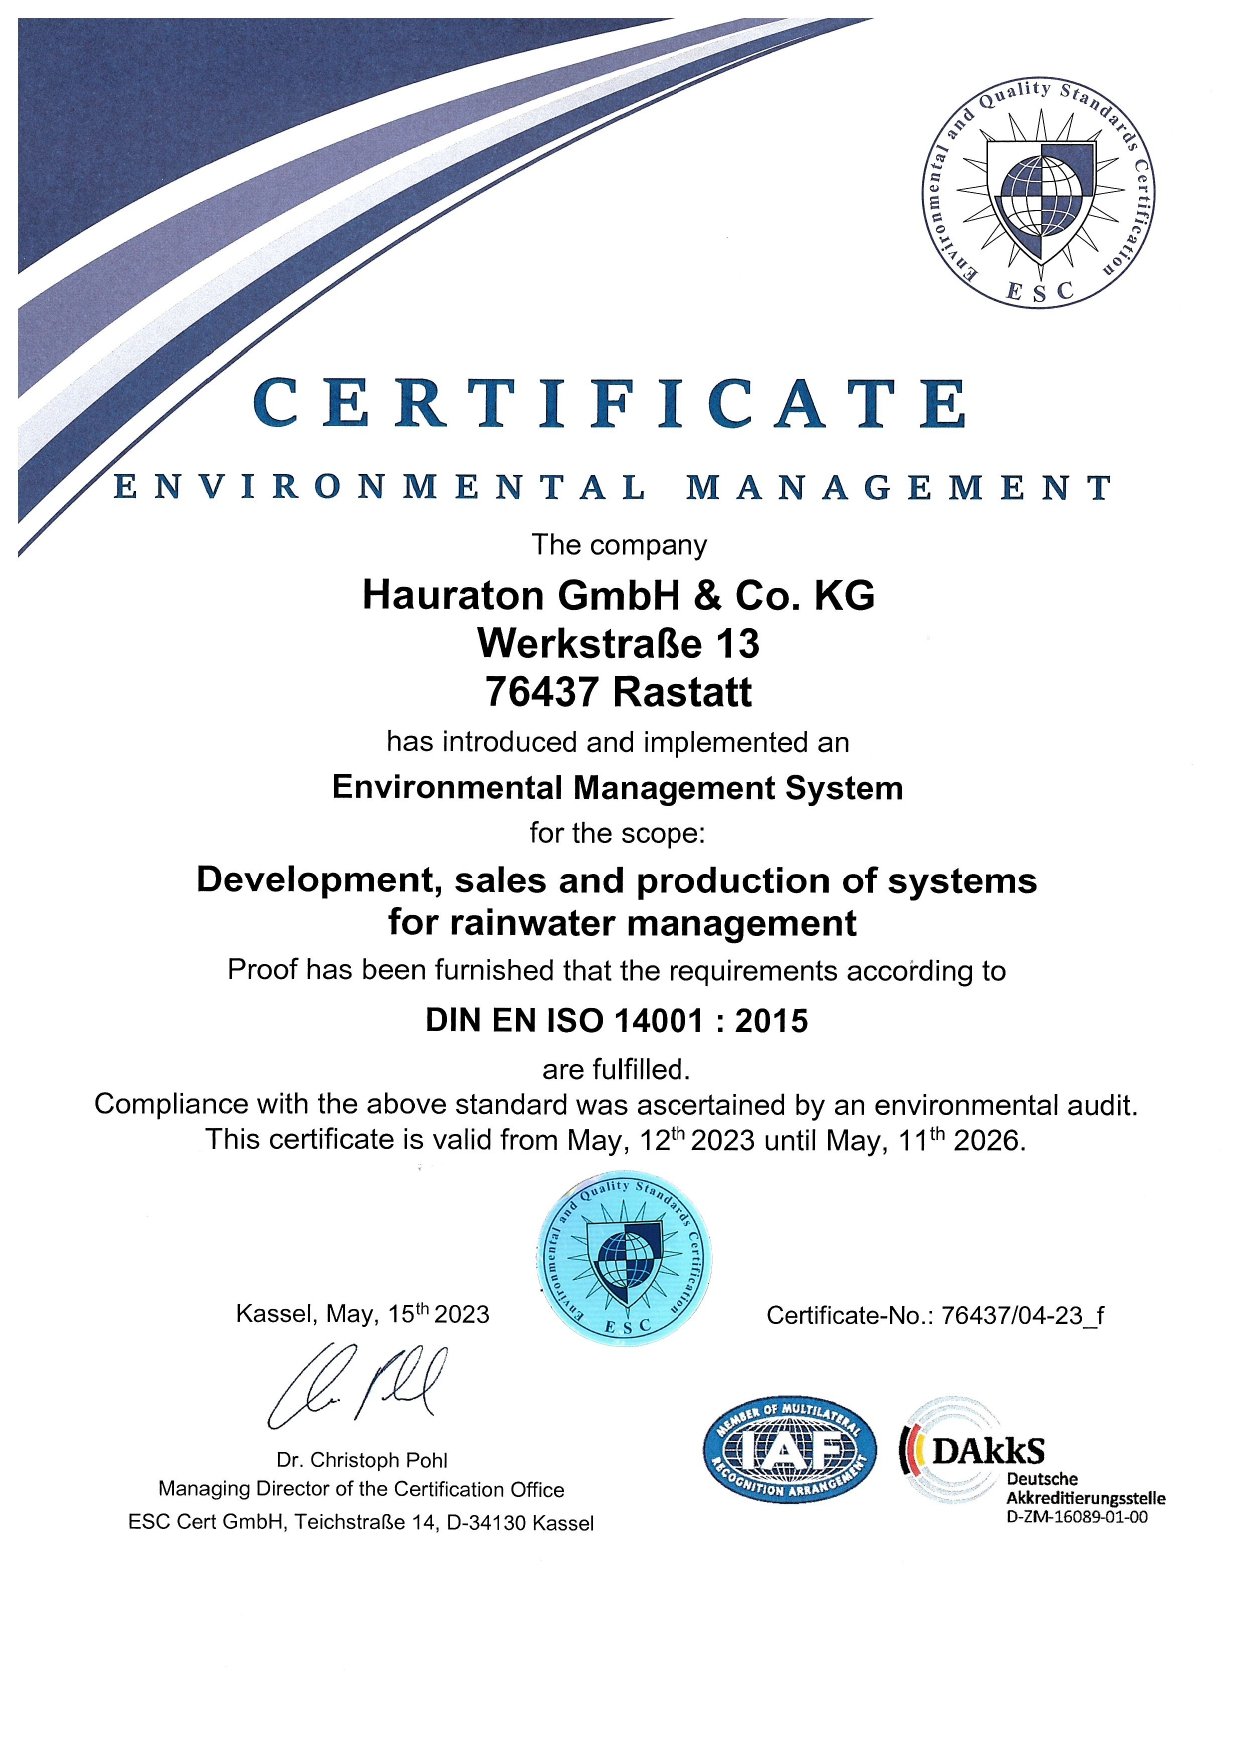 Hauraton Quality management certificate